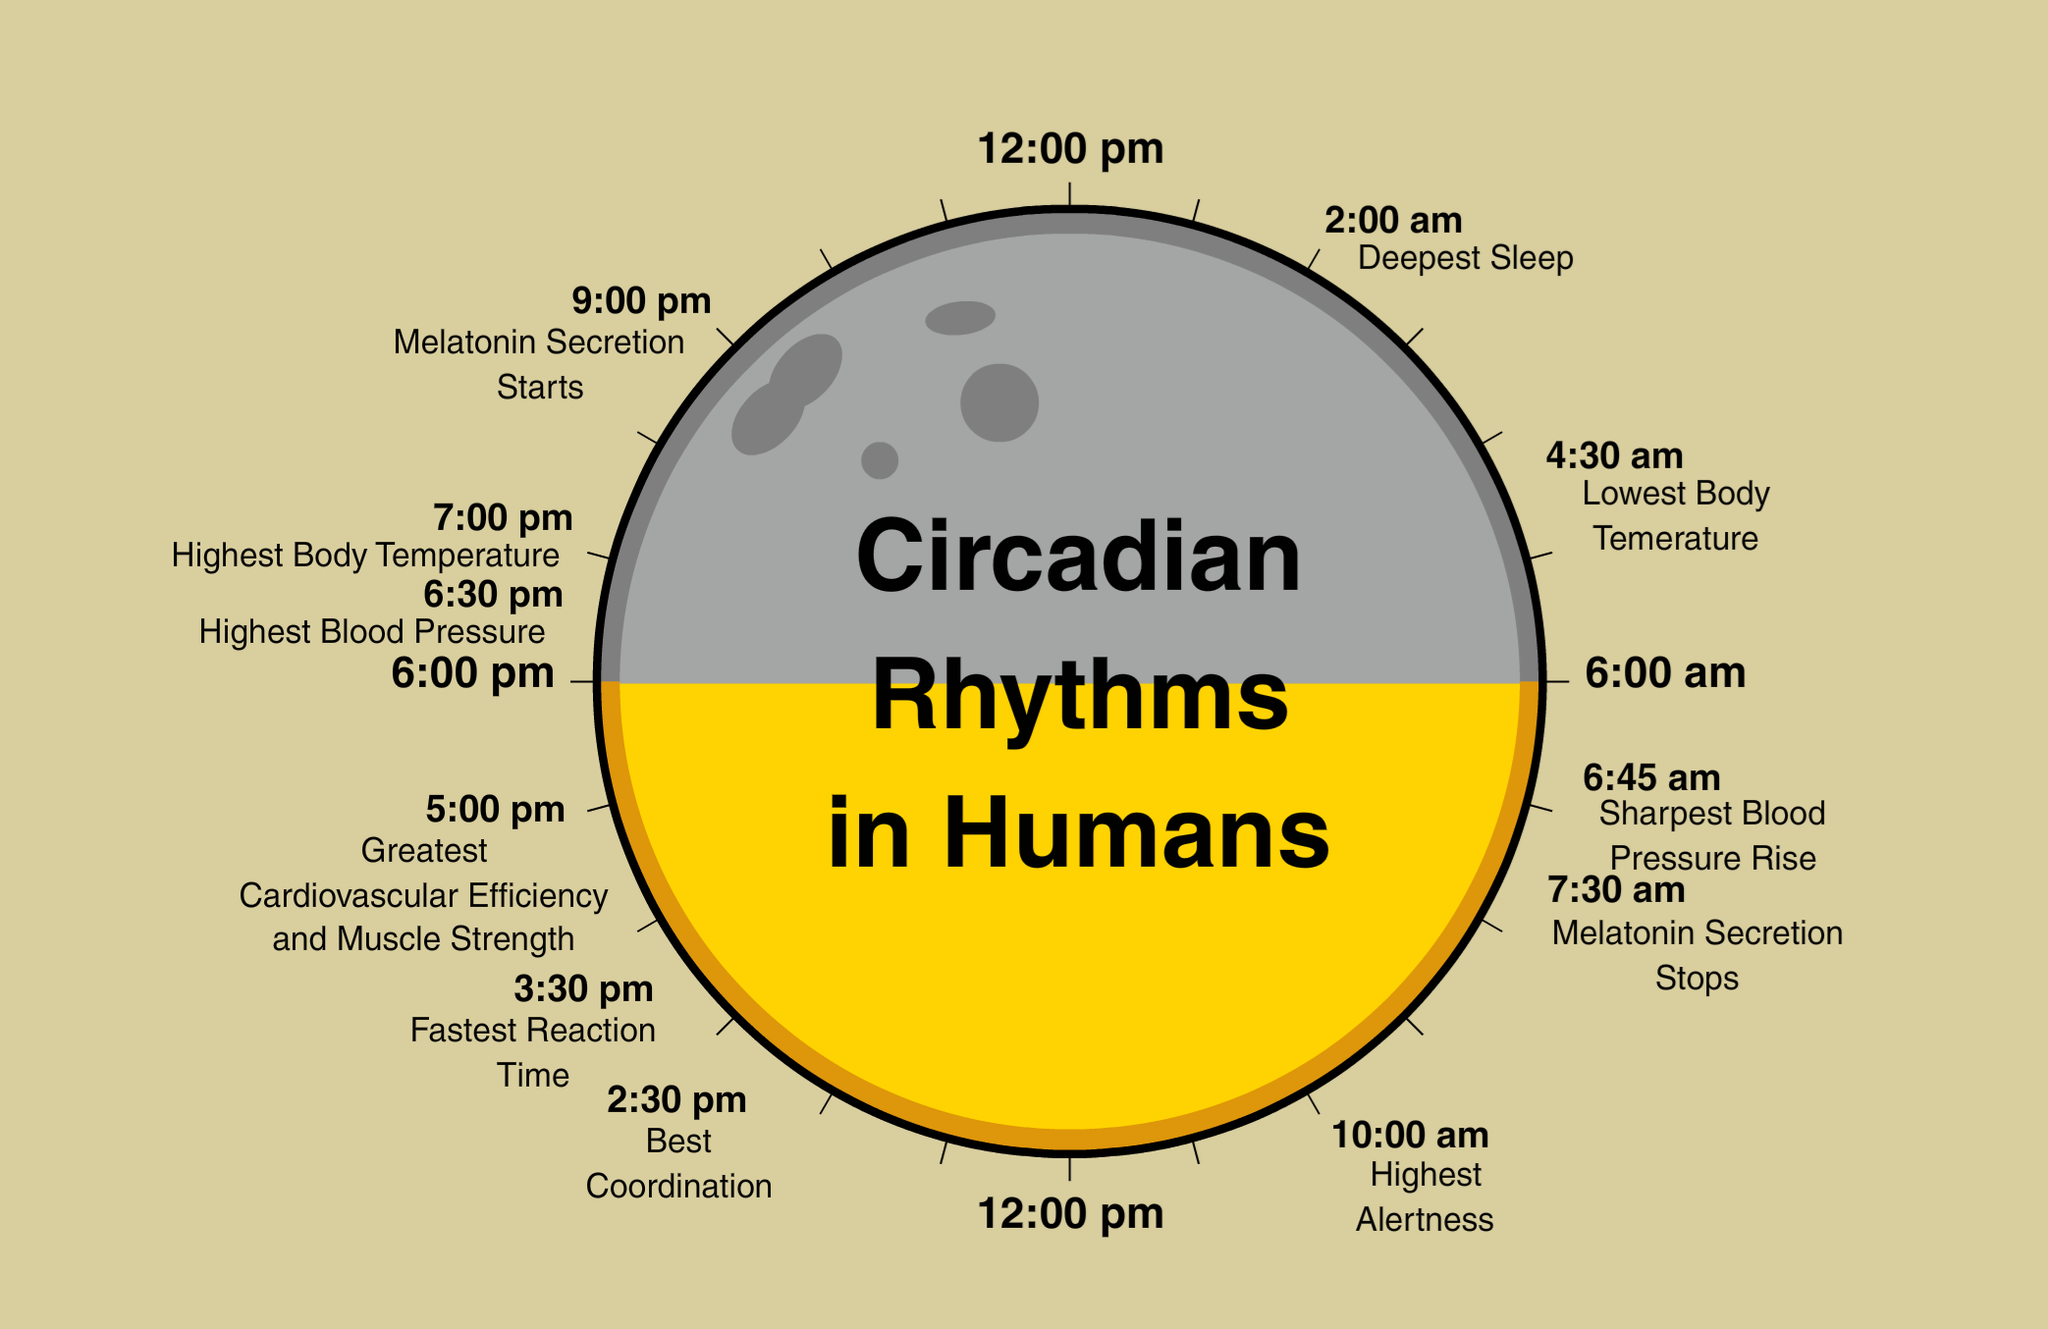 Handy hints for good circadian rhythm and good sleep